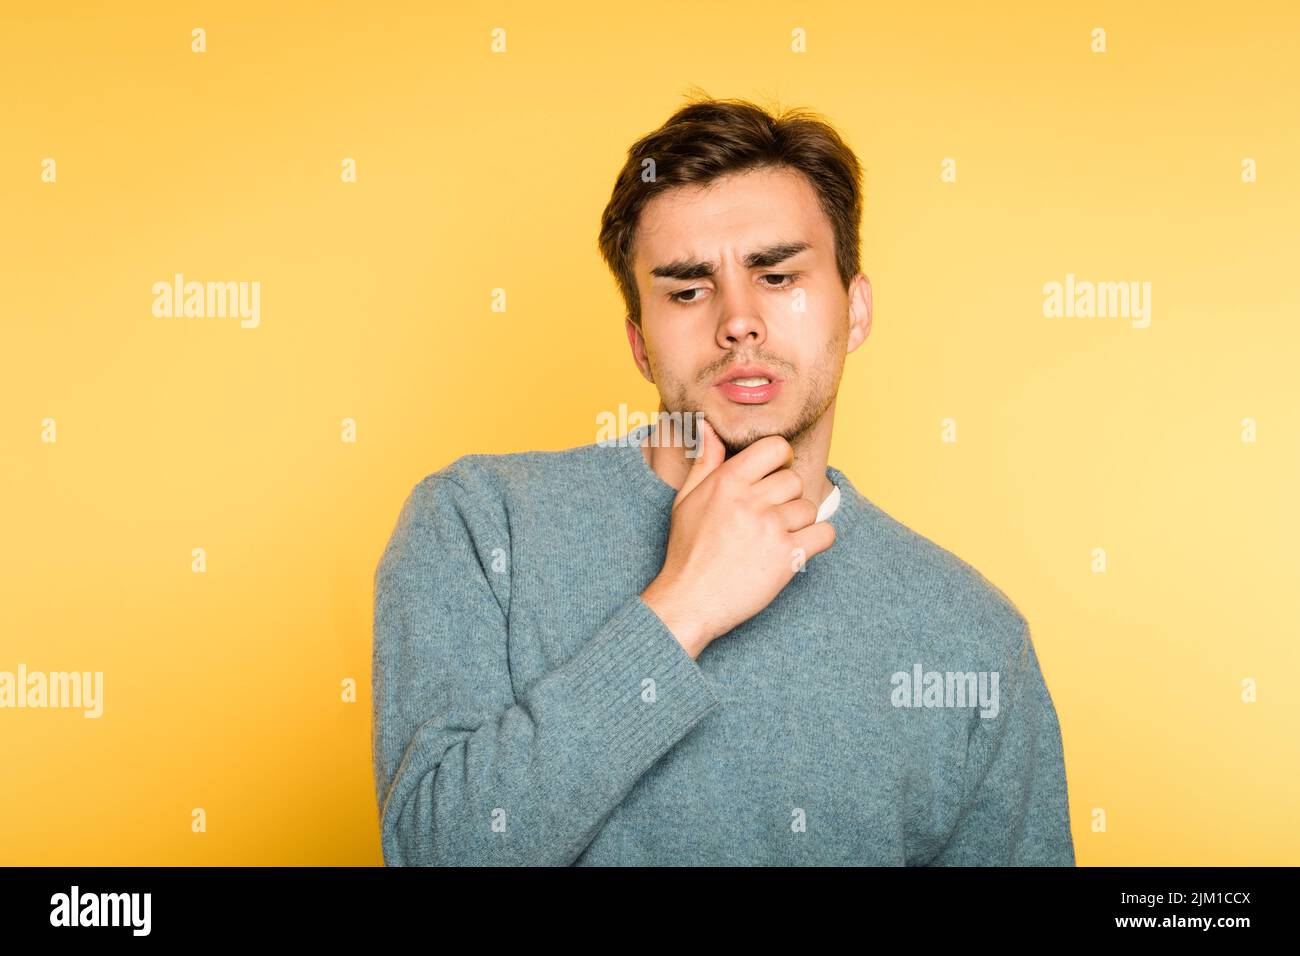 puzzled bewildered man think scratch beard emotion Stock Photo